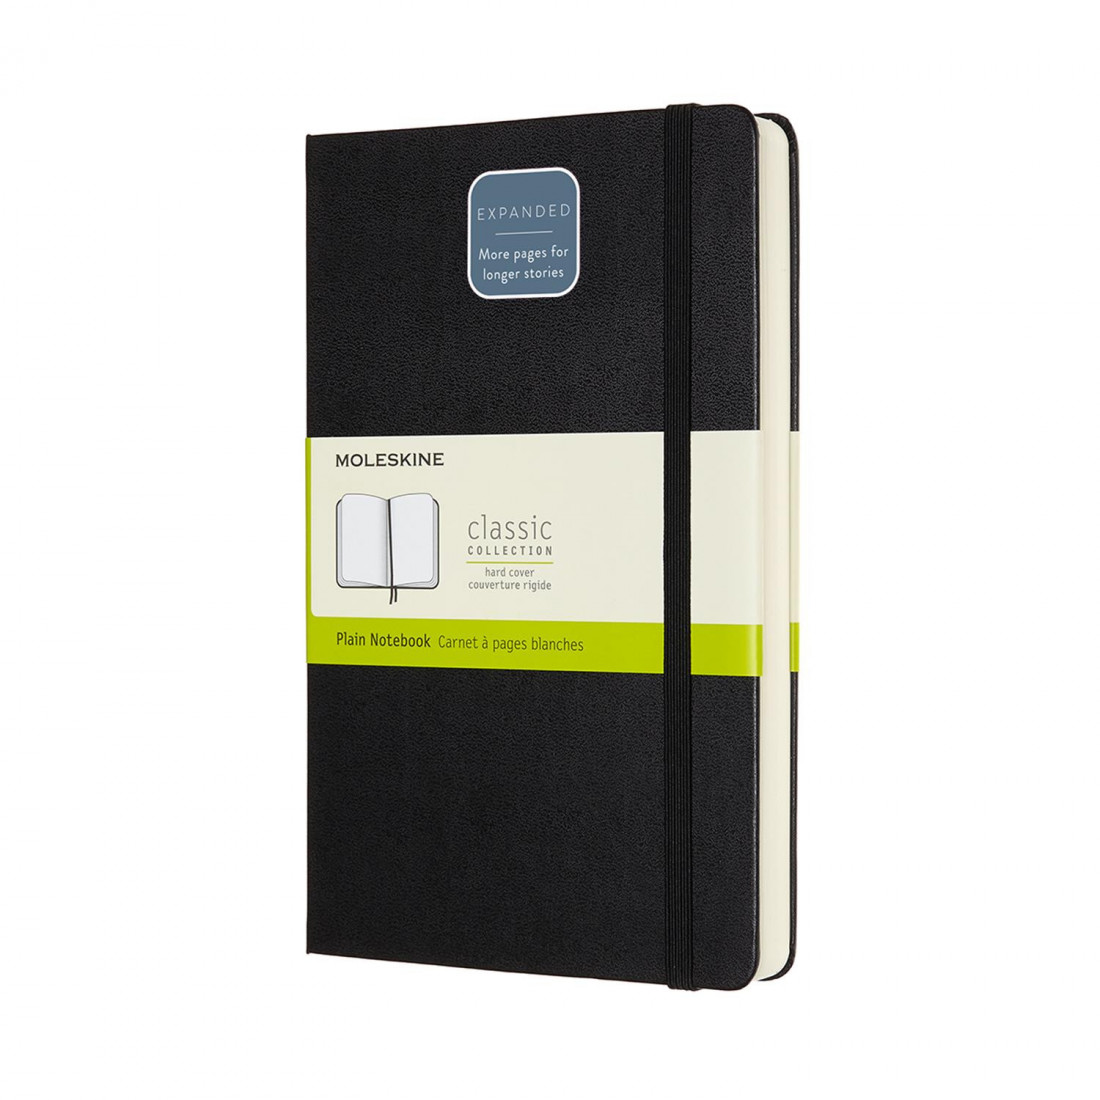 Notebook Large 13x21 Plain Expanded Version Black Hard Cover Moleskine